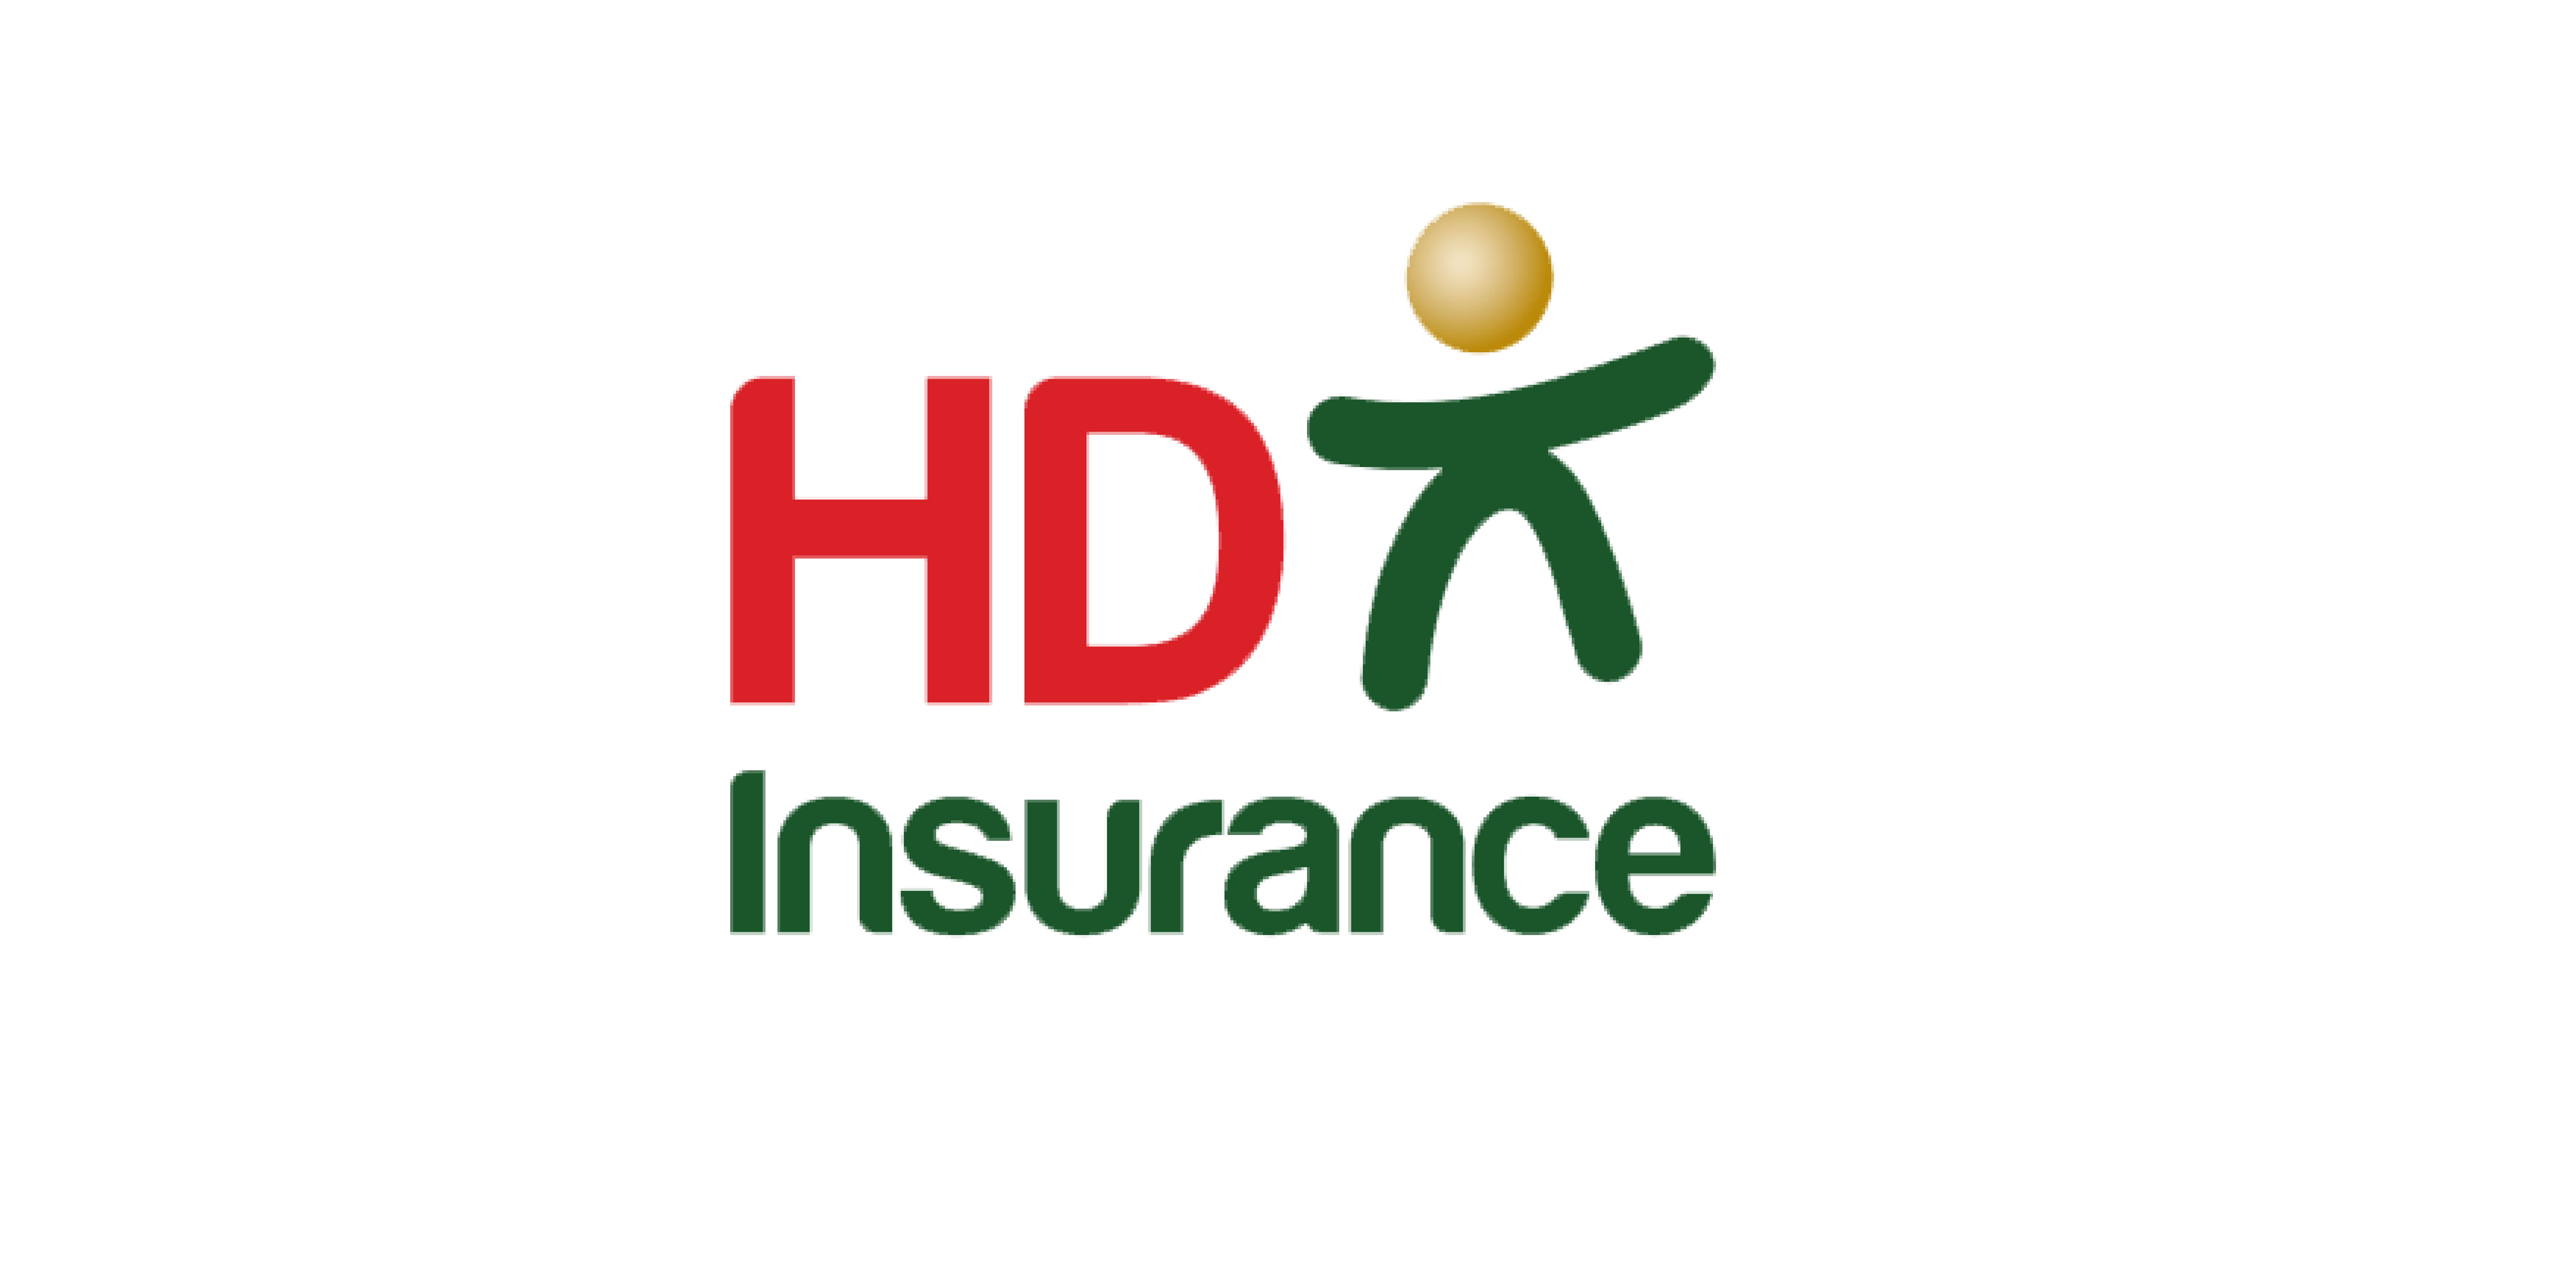 HD Insurance 